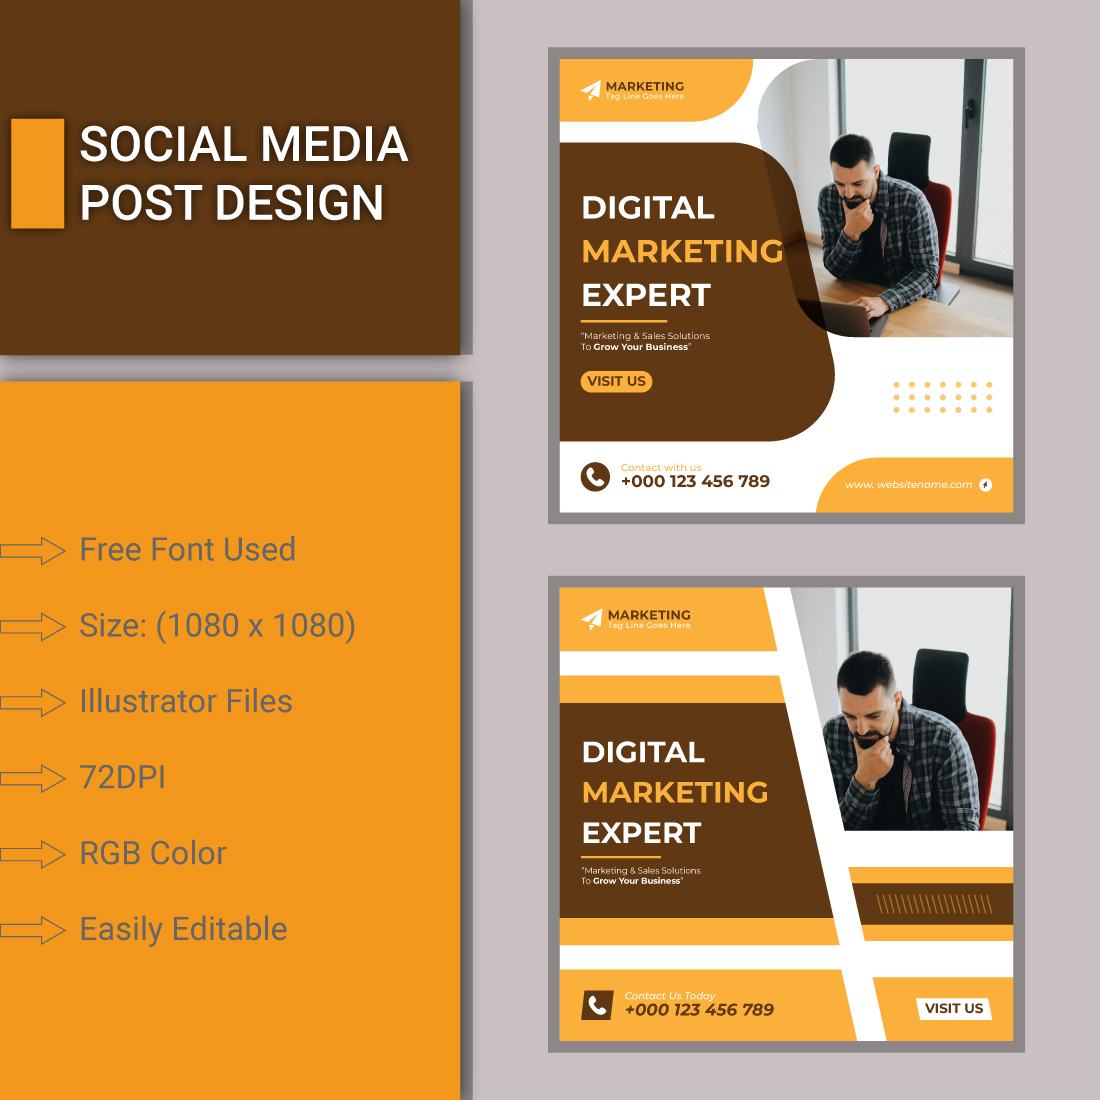 Social Media Post Design Template preview image.